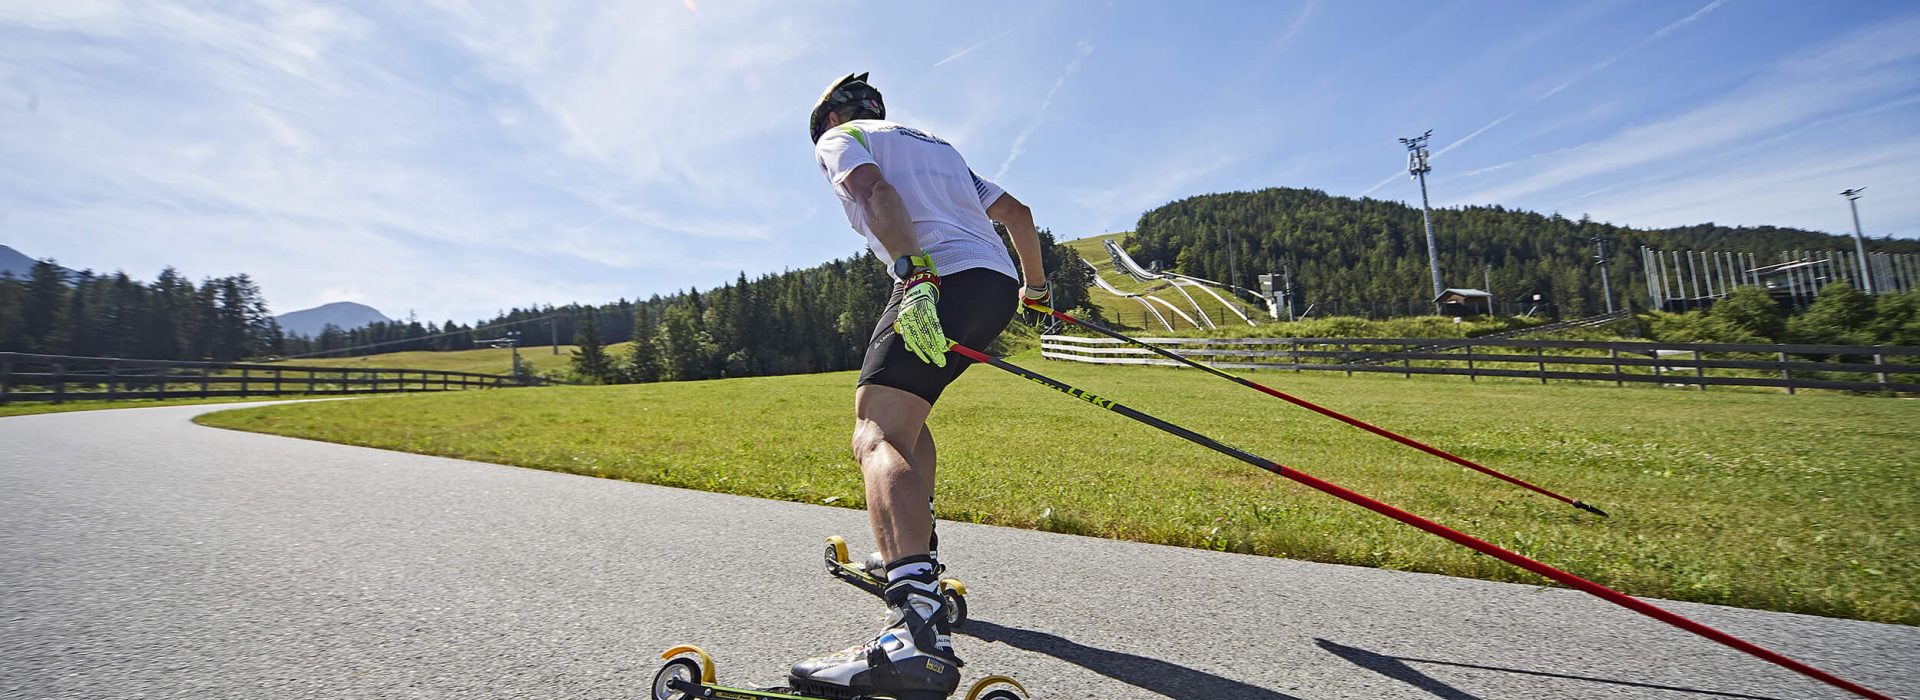 Skiroller Training © Region Seefeld, Tobias Burger